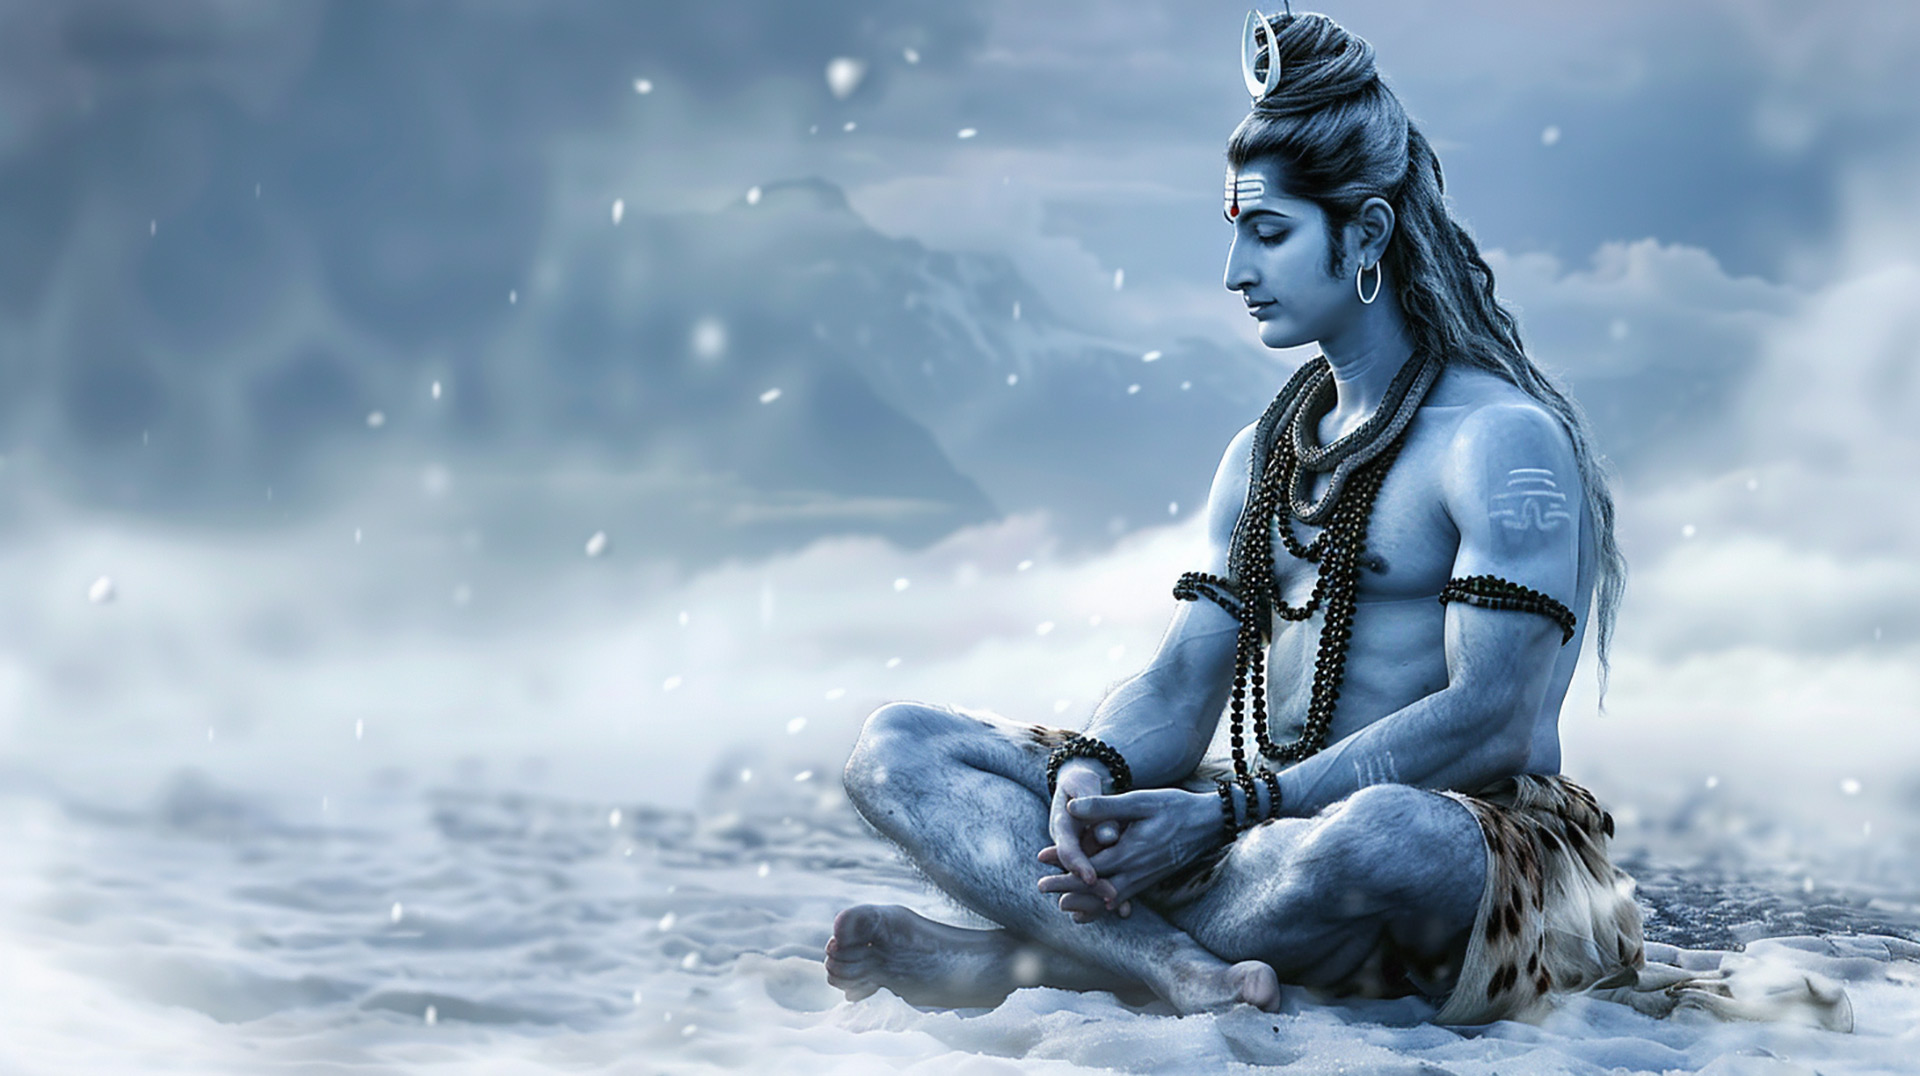 Shiva's Third Eye: HD Image Depicting the Symbolic Third Eye of Lord Shiva